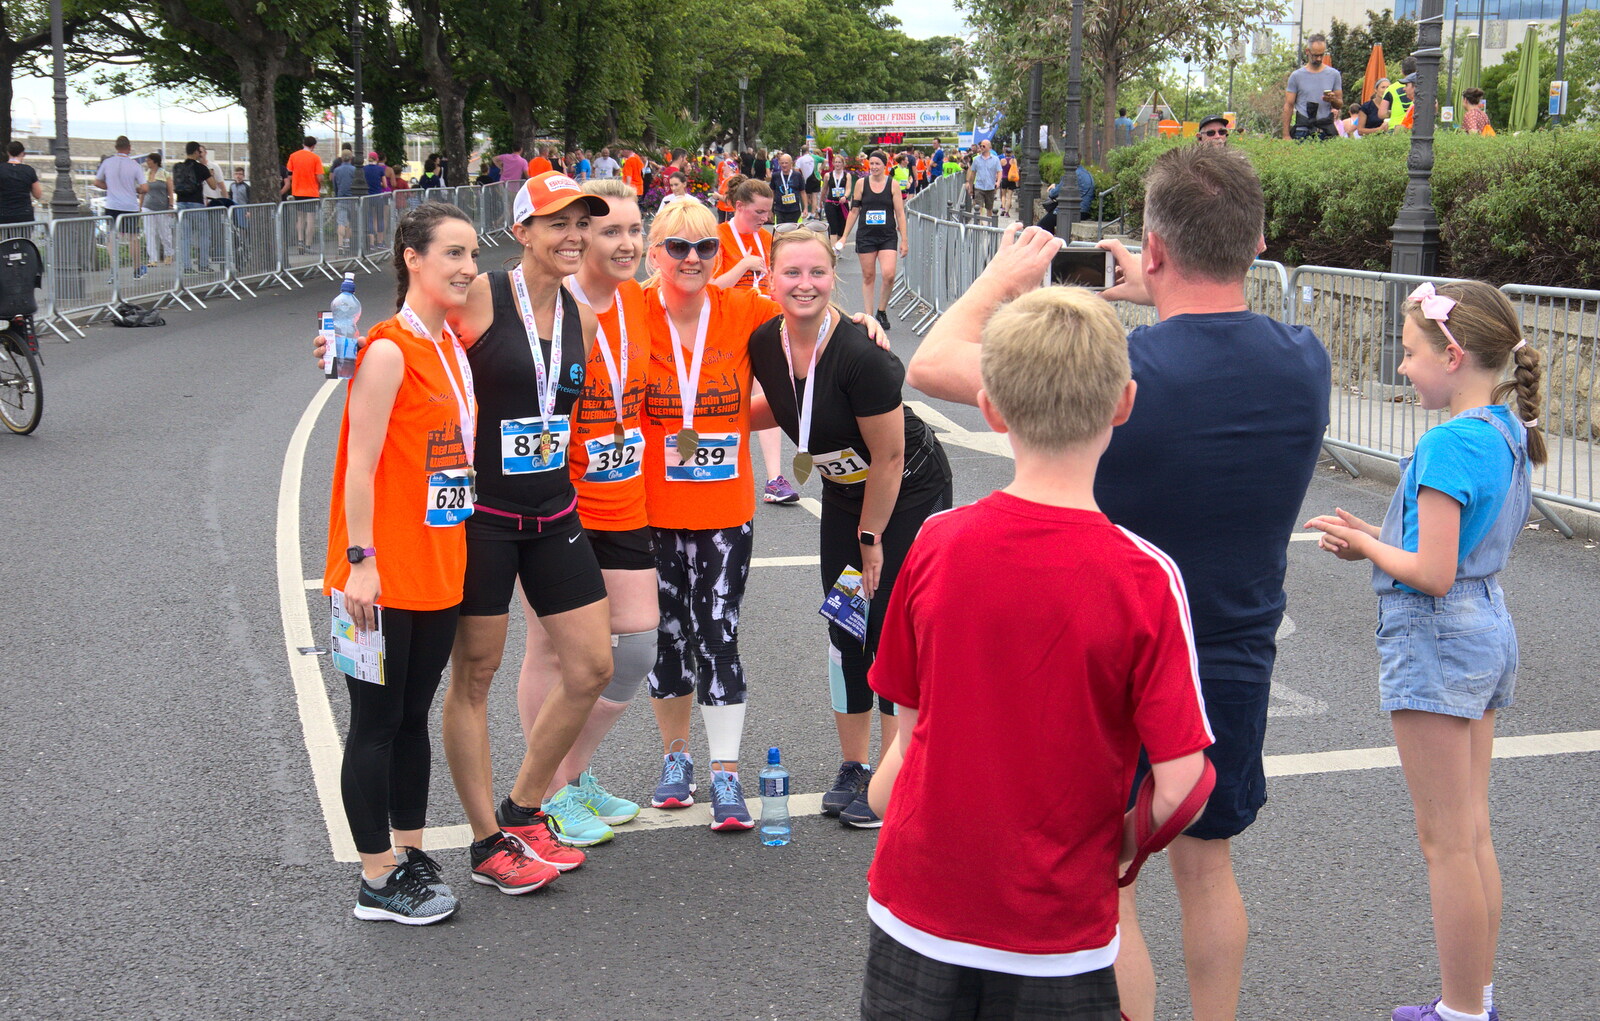 A group photo from The Dún Laoghaire 10k Run, County Dublin, Ireland - 6th August 2018